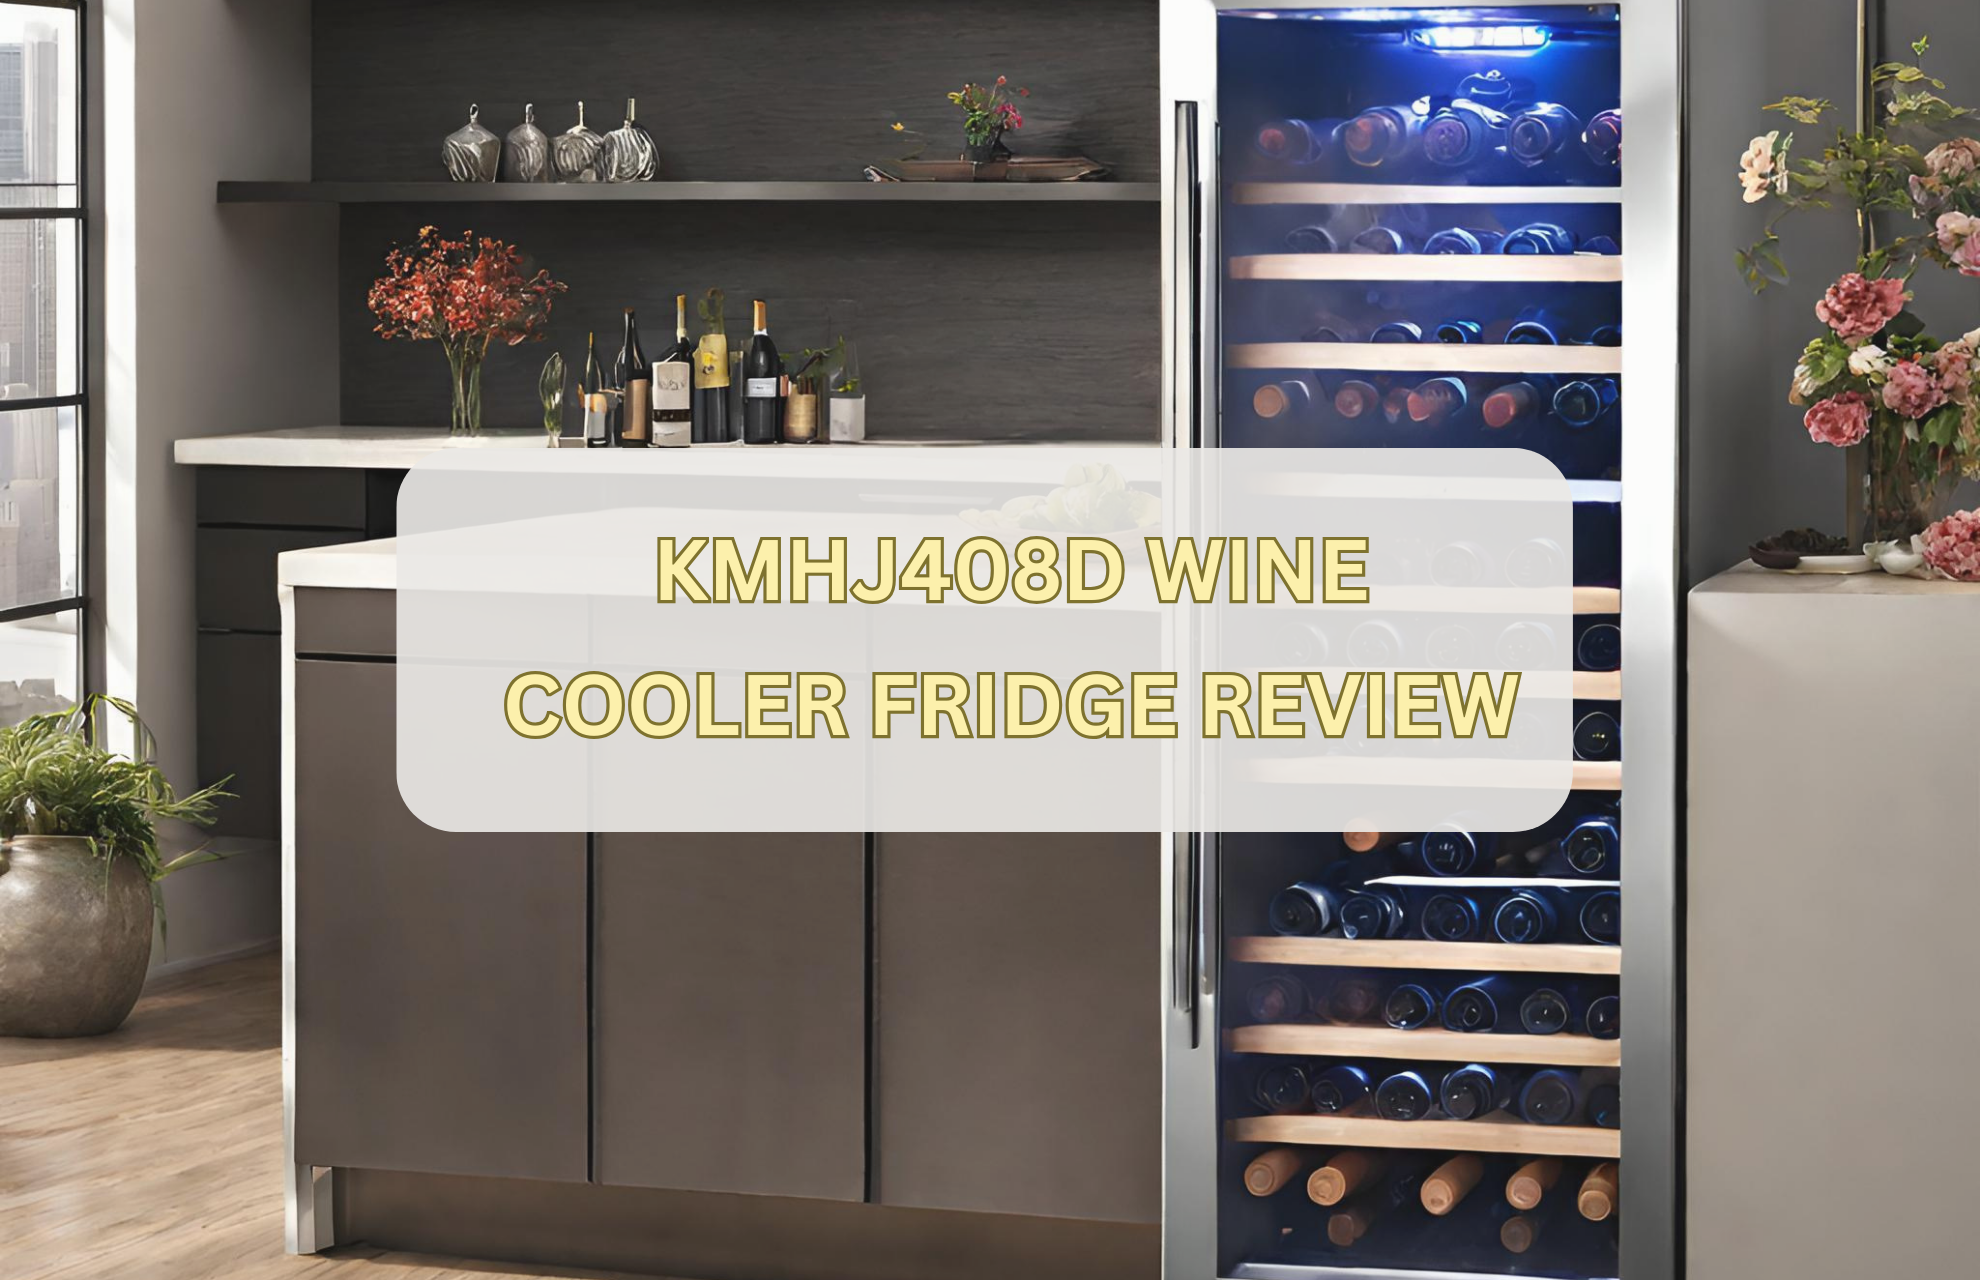 KMHJ408D Wine Cooler Fridge Review